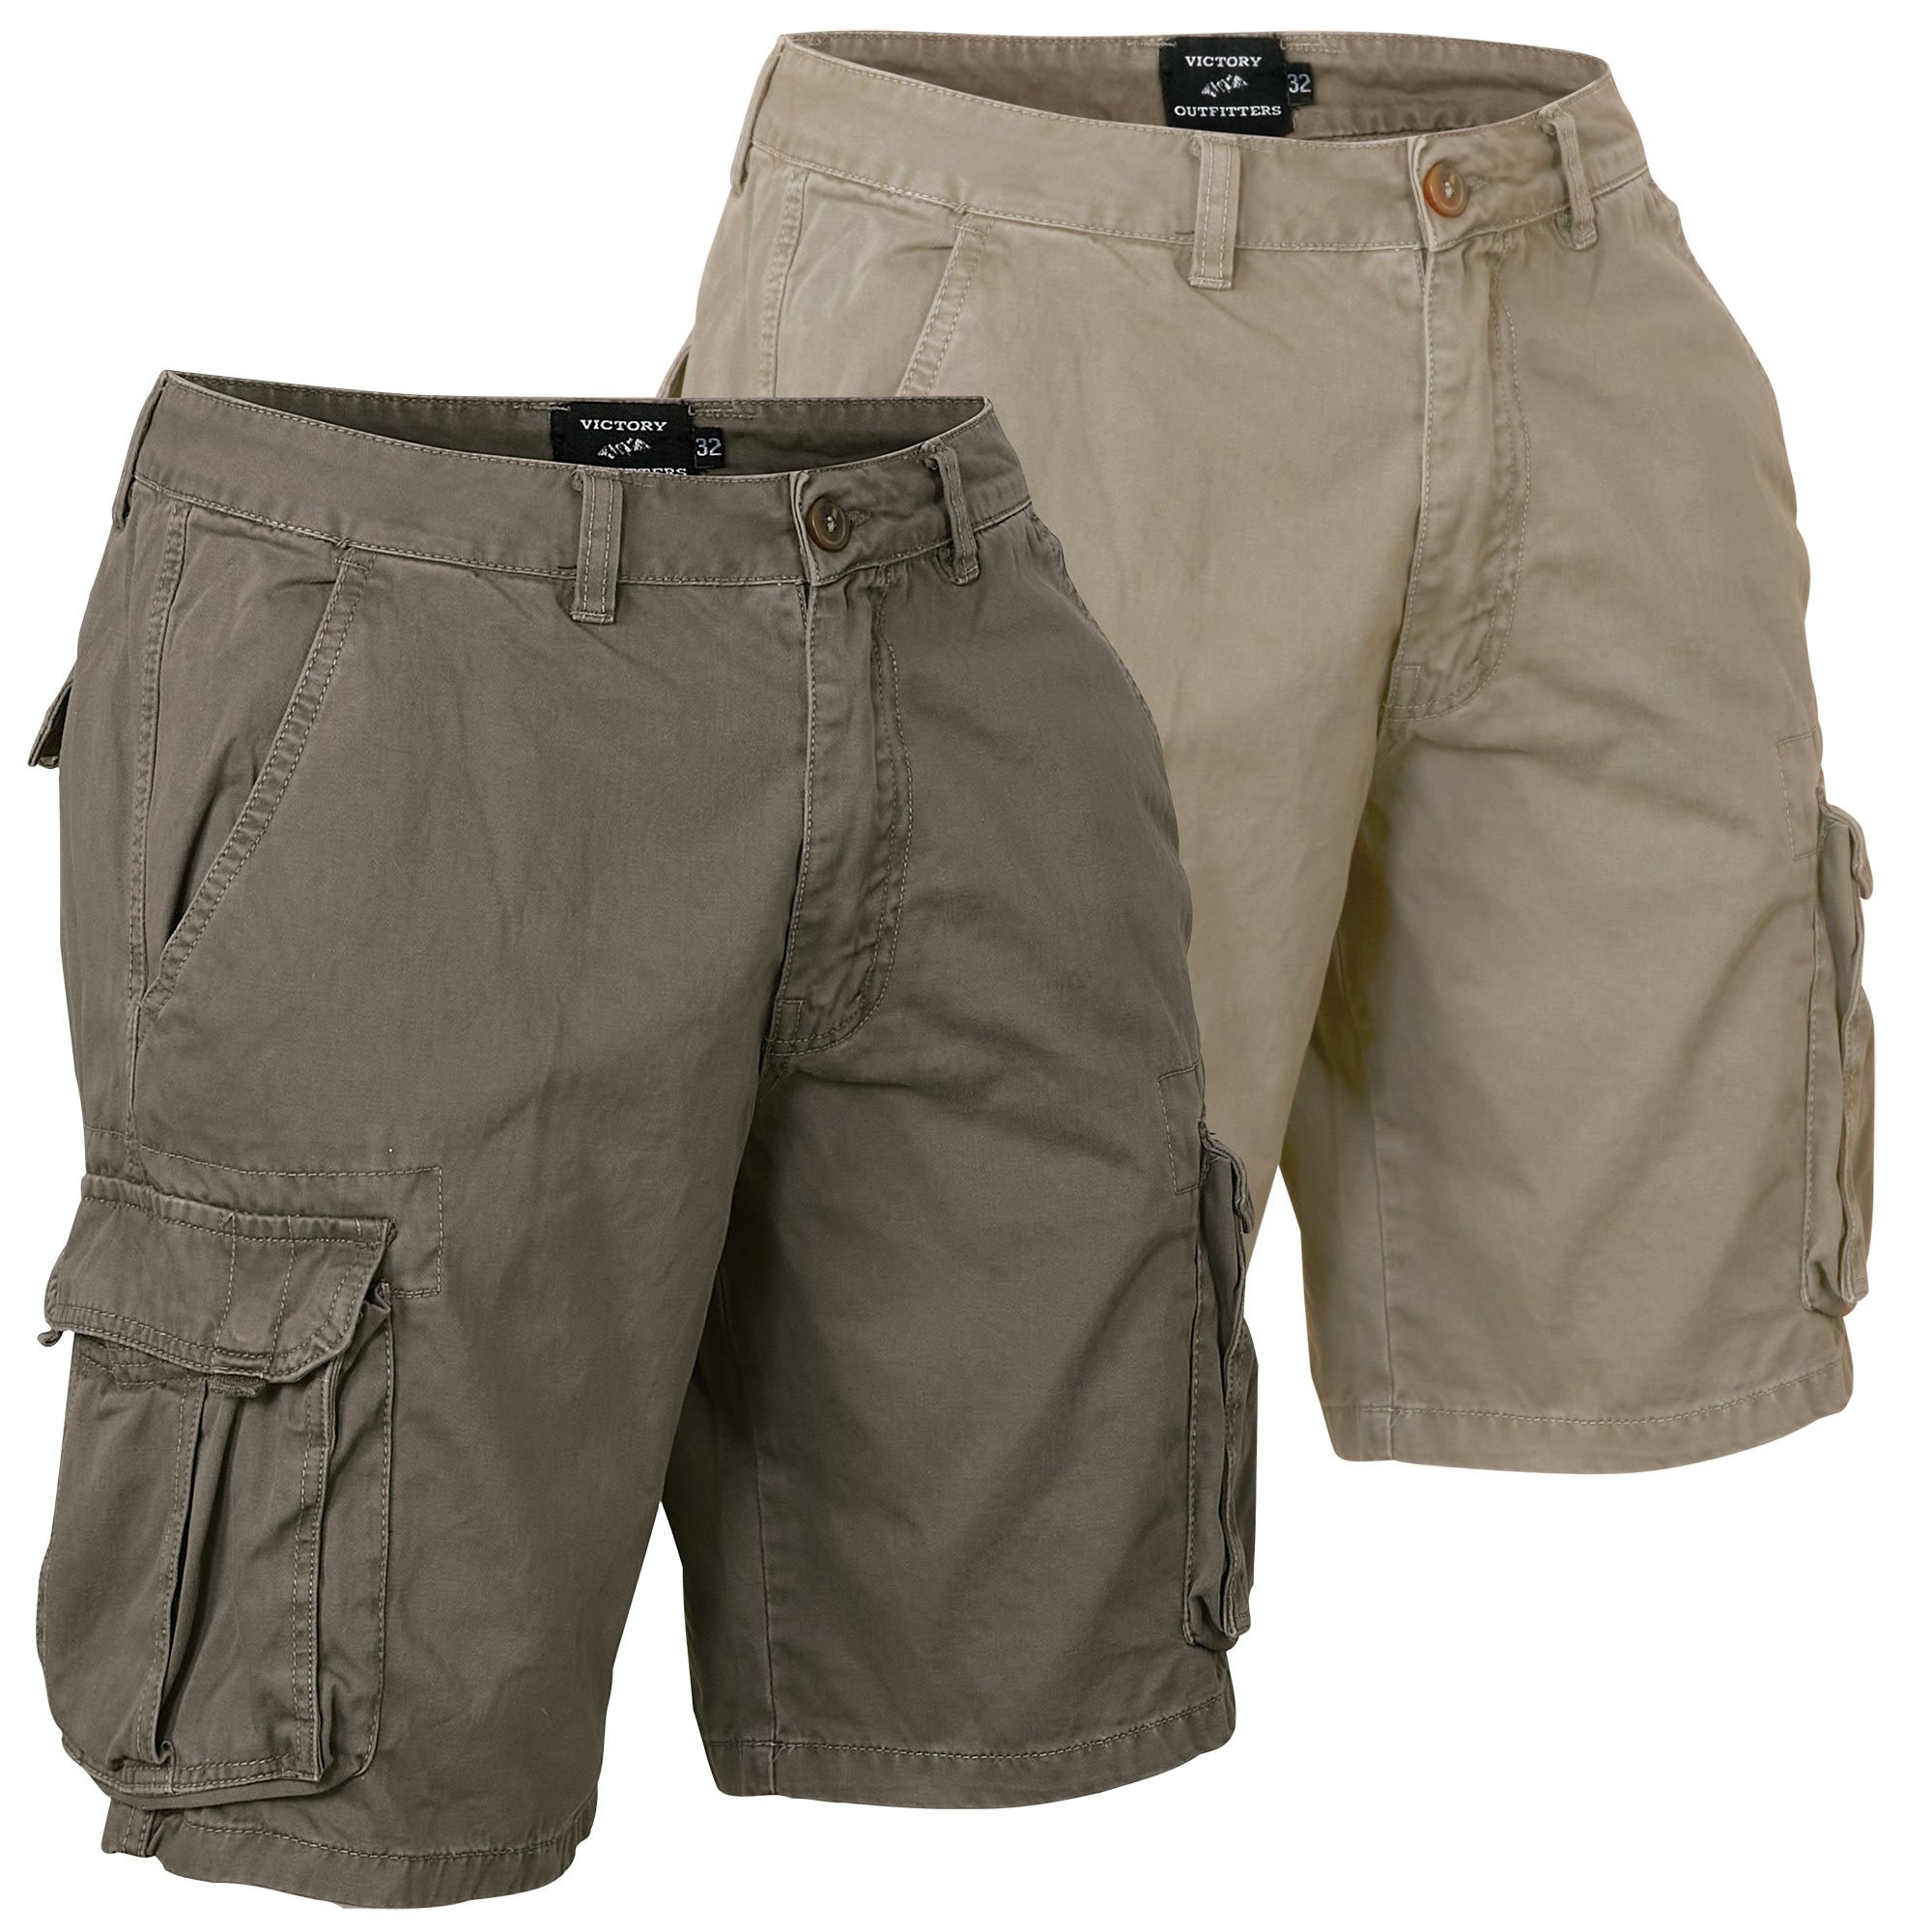 Men's Twill Cargo Shorts - 2 Pack